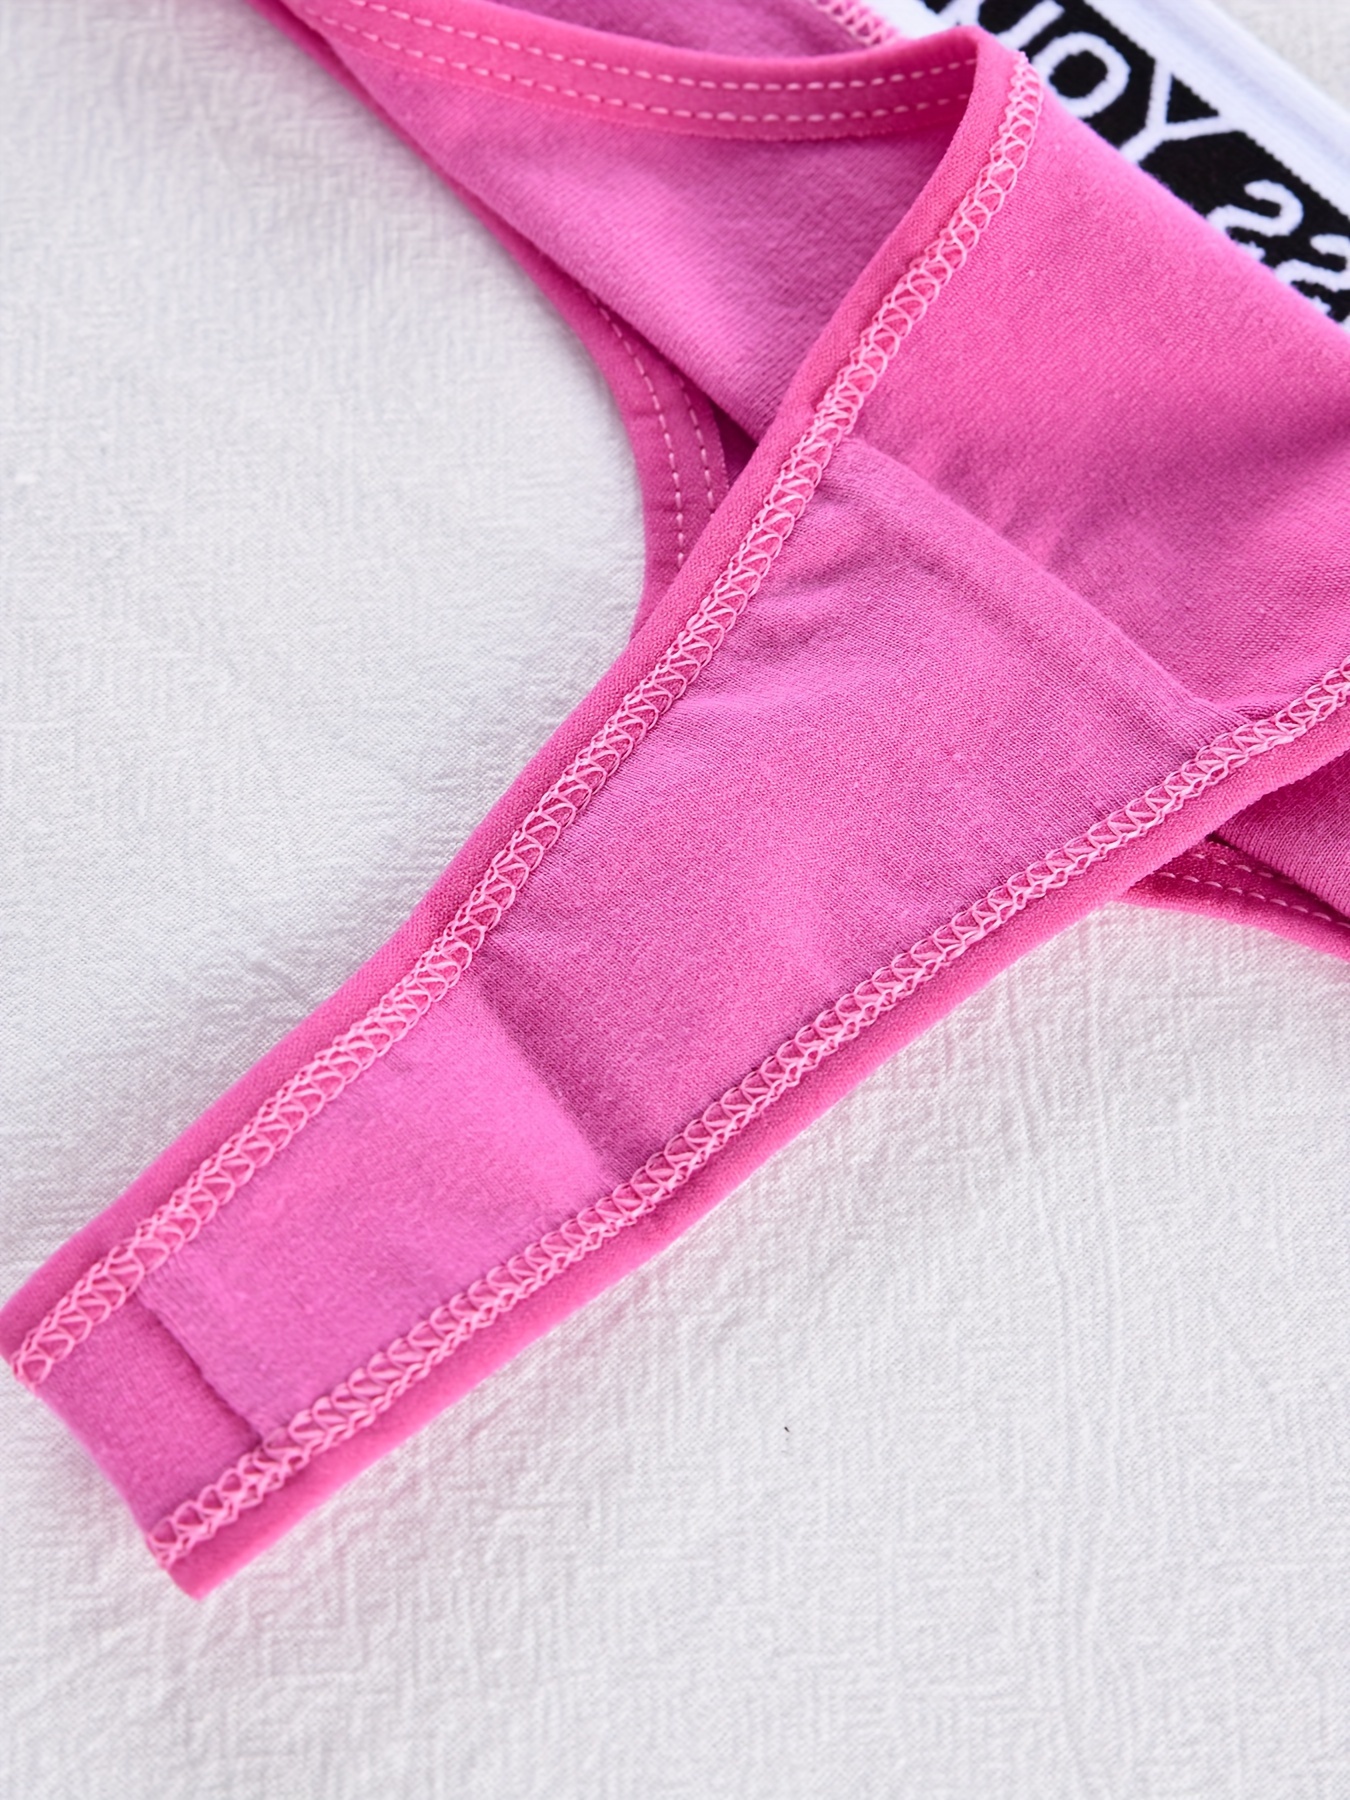 PINK Victoria's Secret, Intimates & Sleepwear, Victorias Secret Pink  Cotton Thong Panty Pink W Banana Embroidery Large New